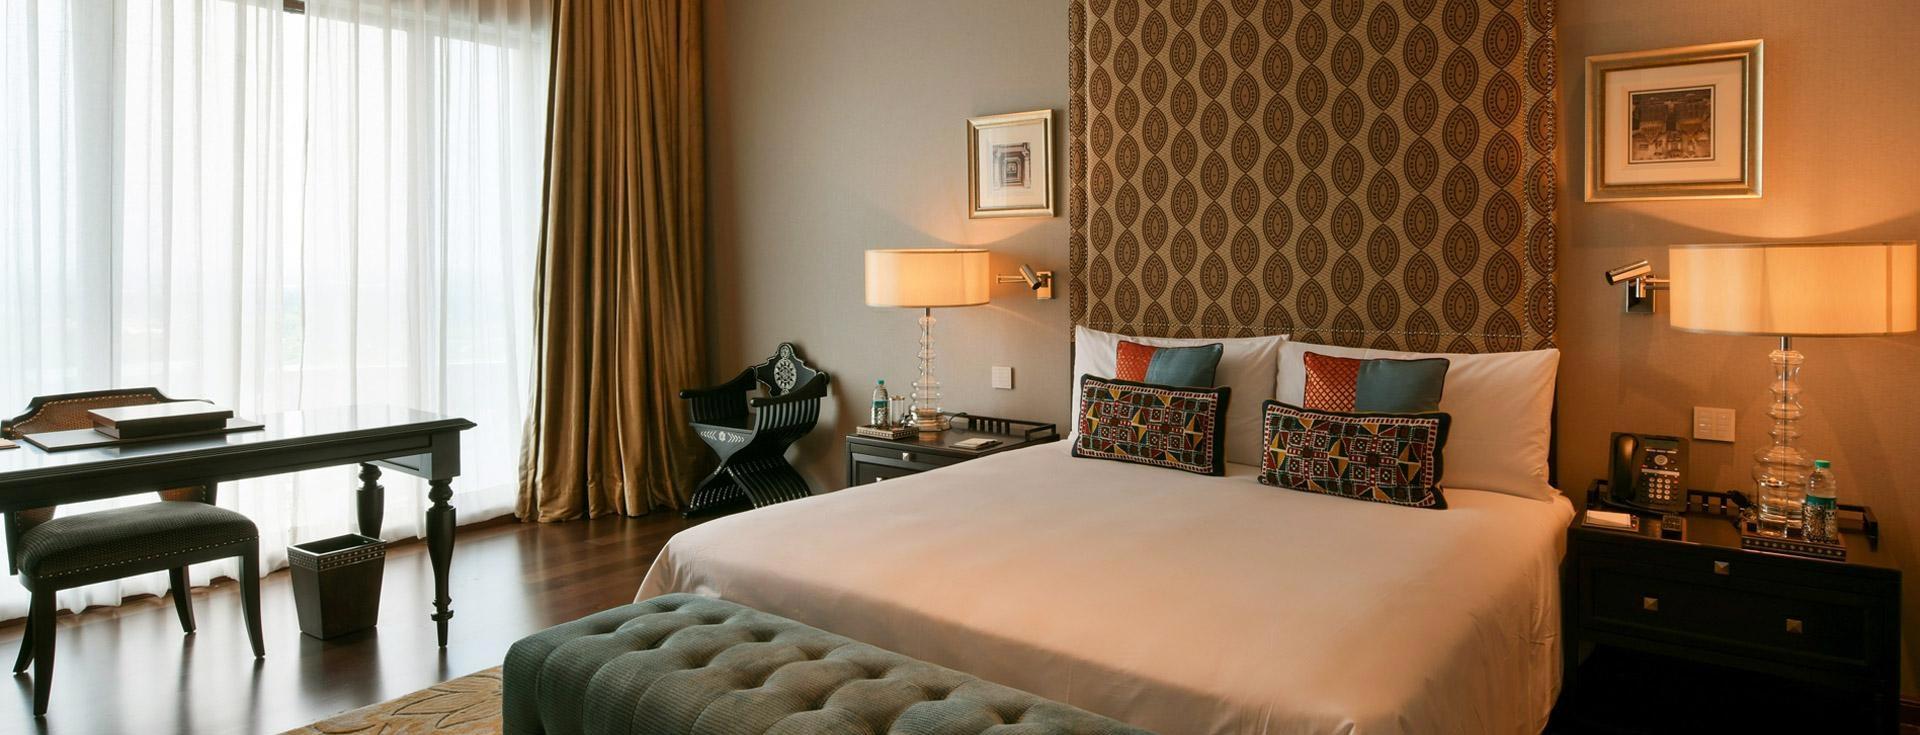 Stay at the Royal Suite - The Leela Gandhinagar